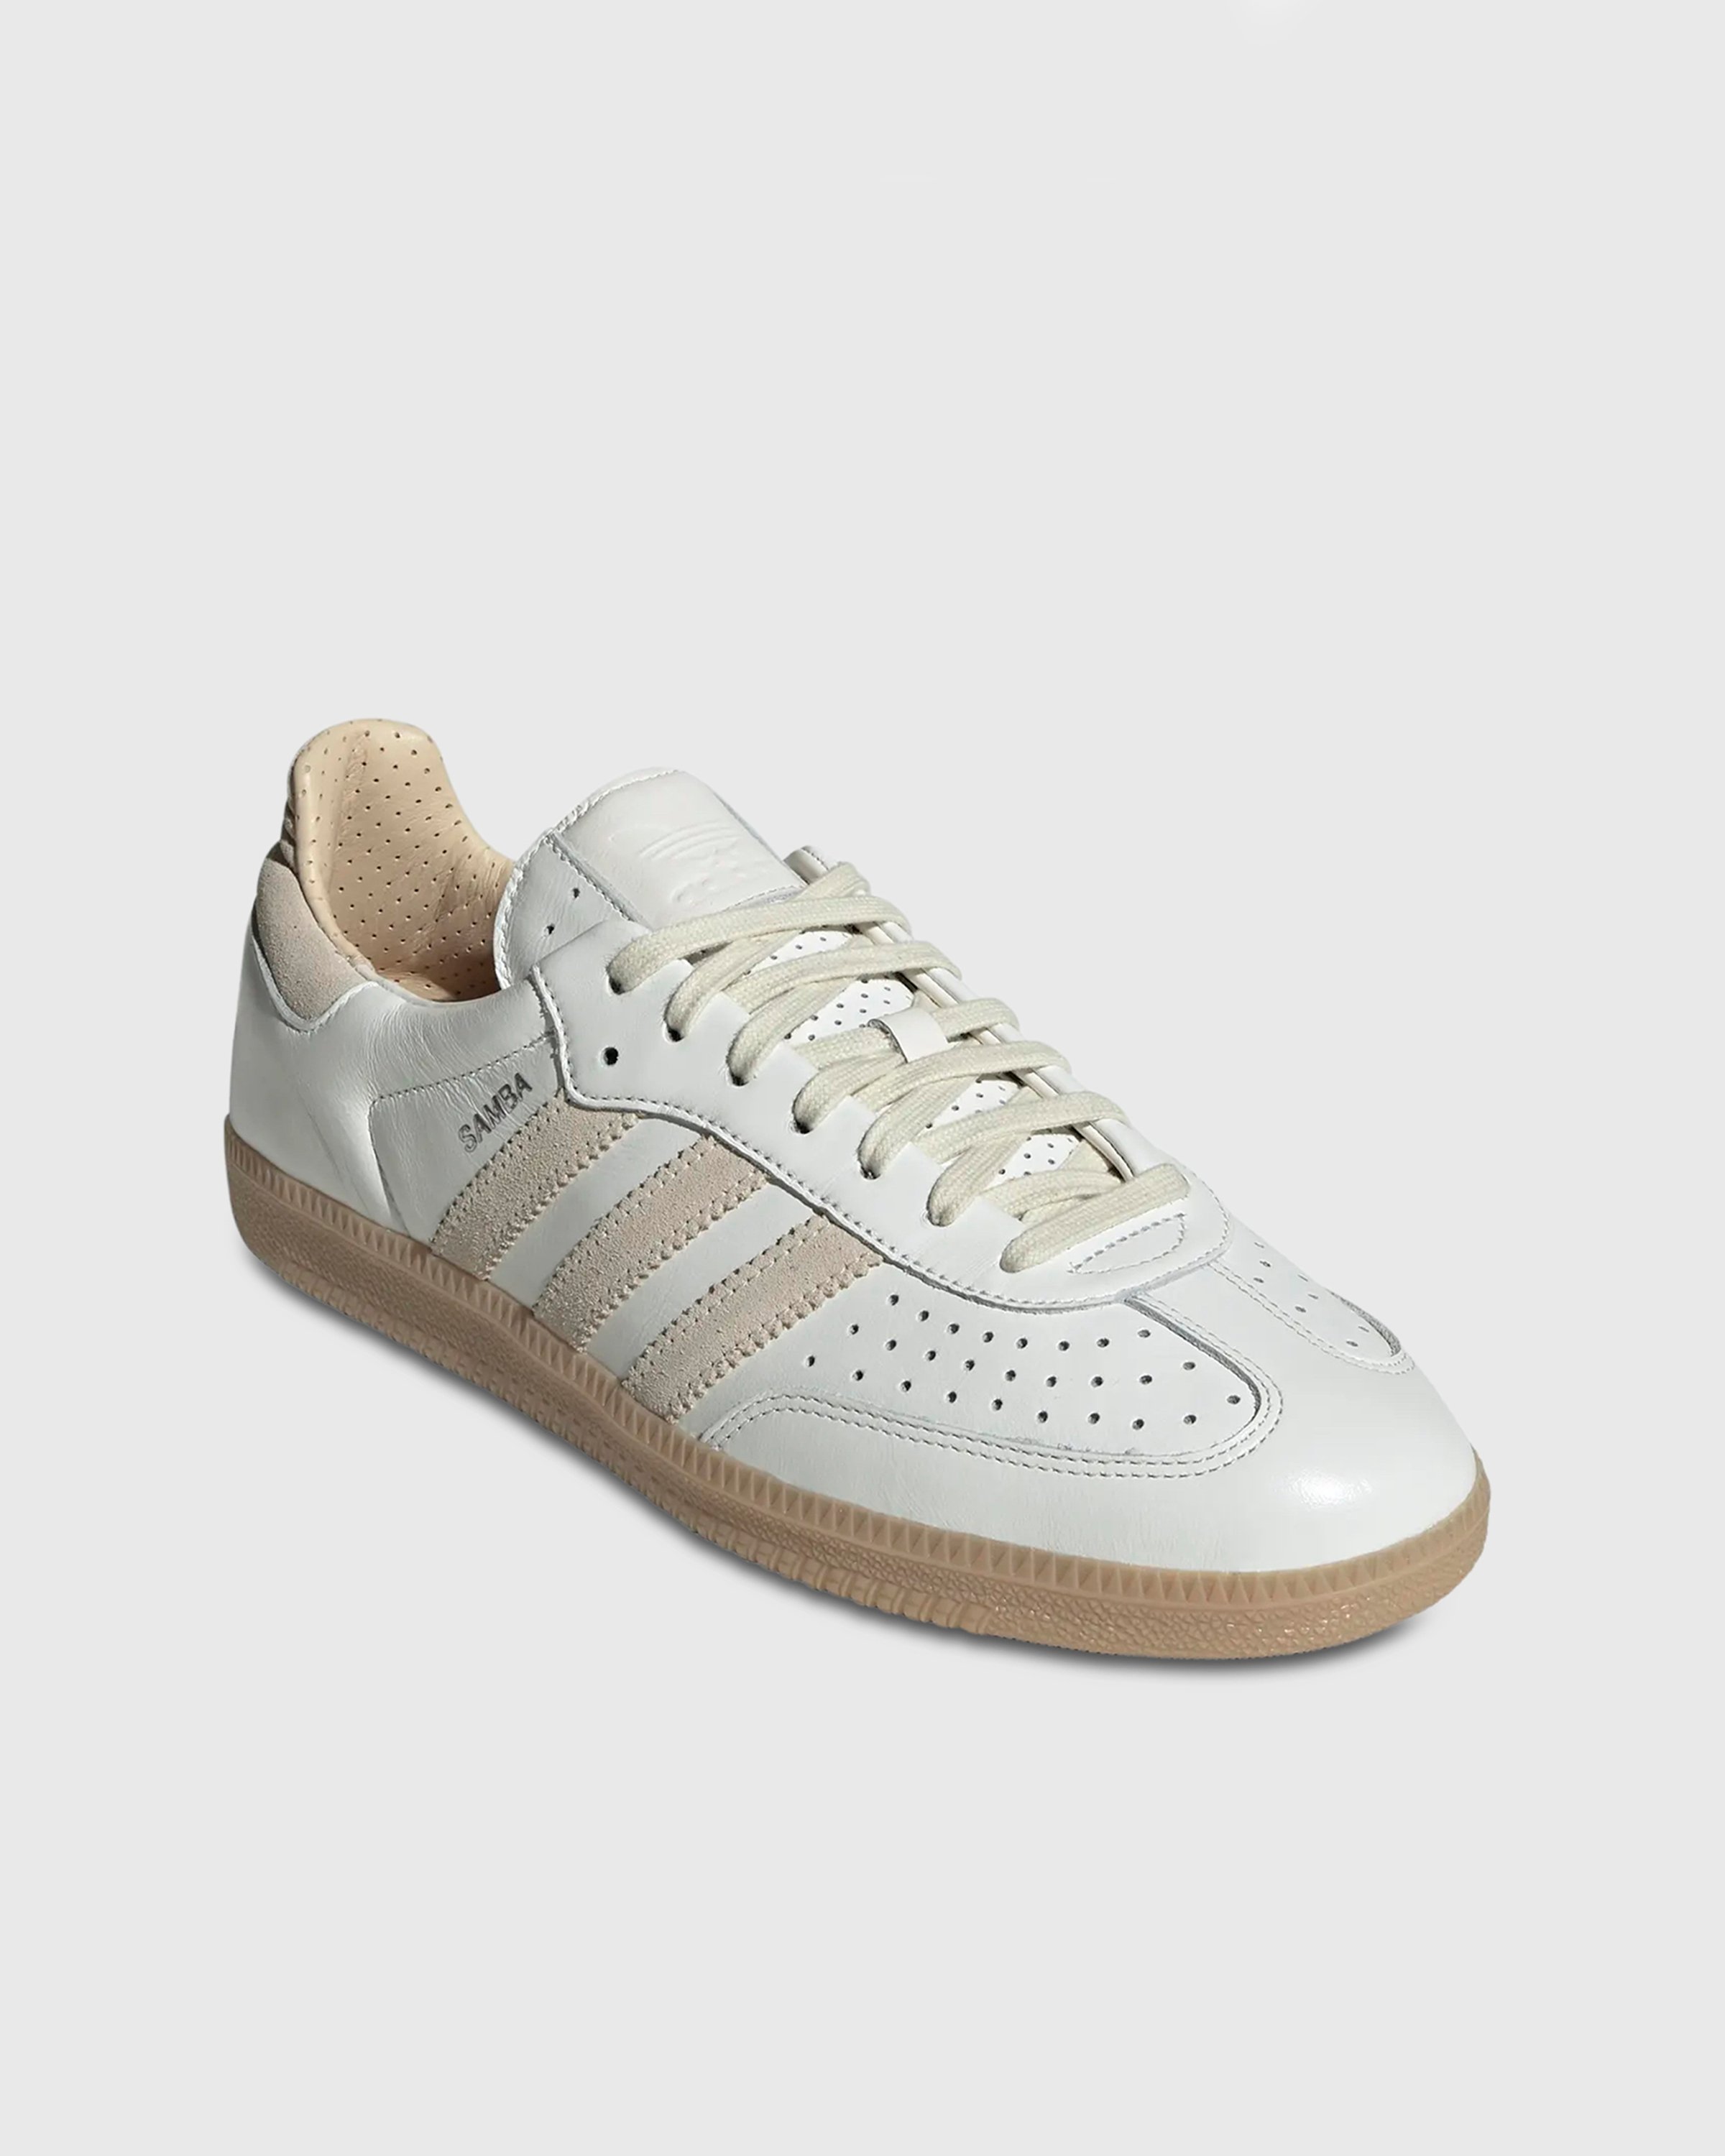 Adidas - SAMBA OG            CWHITE/WONWHI/MAGBEI - Footwear - White - Image 3